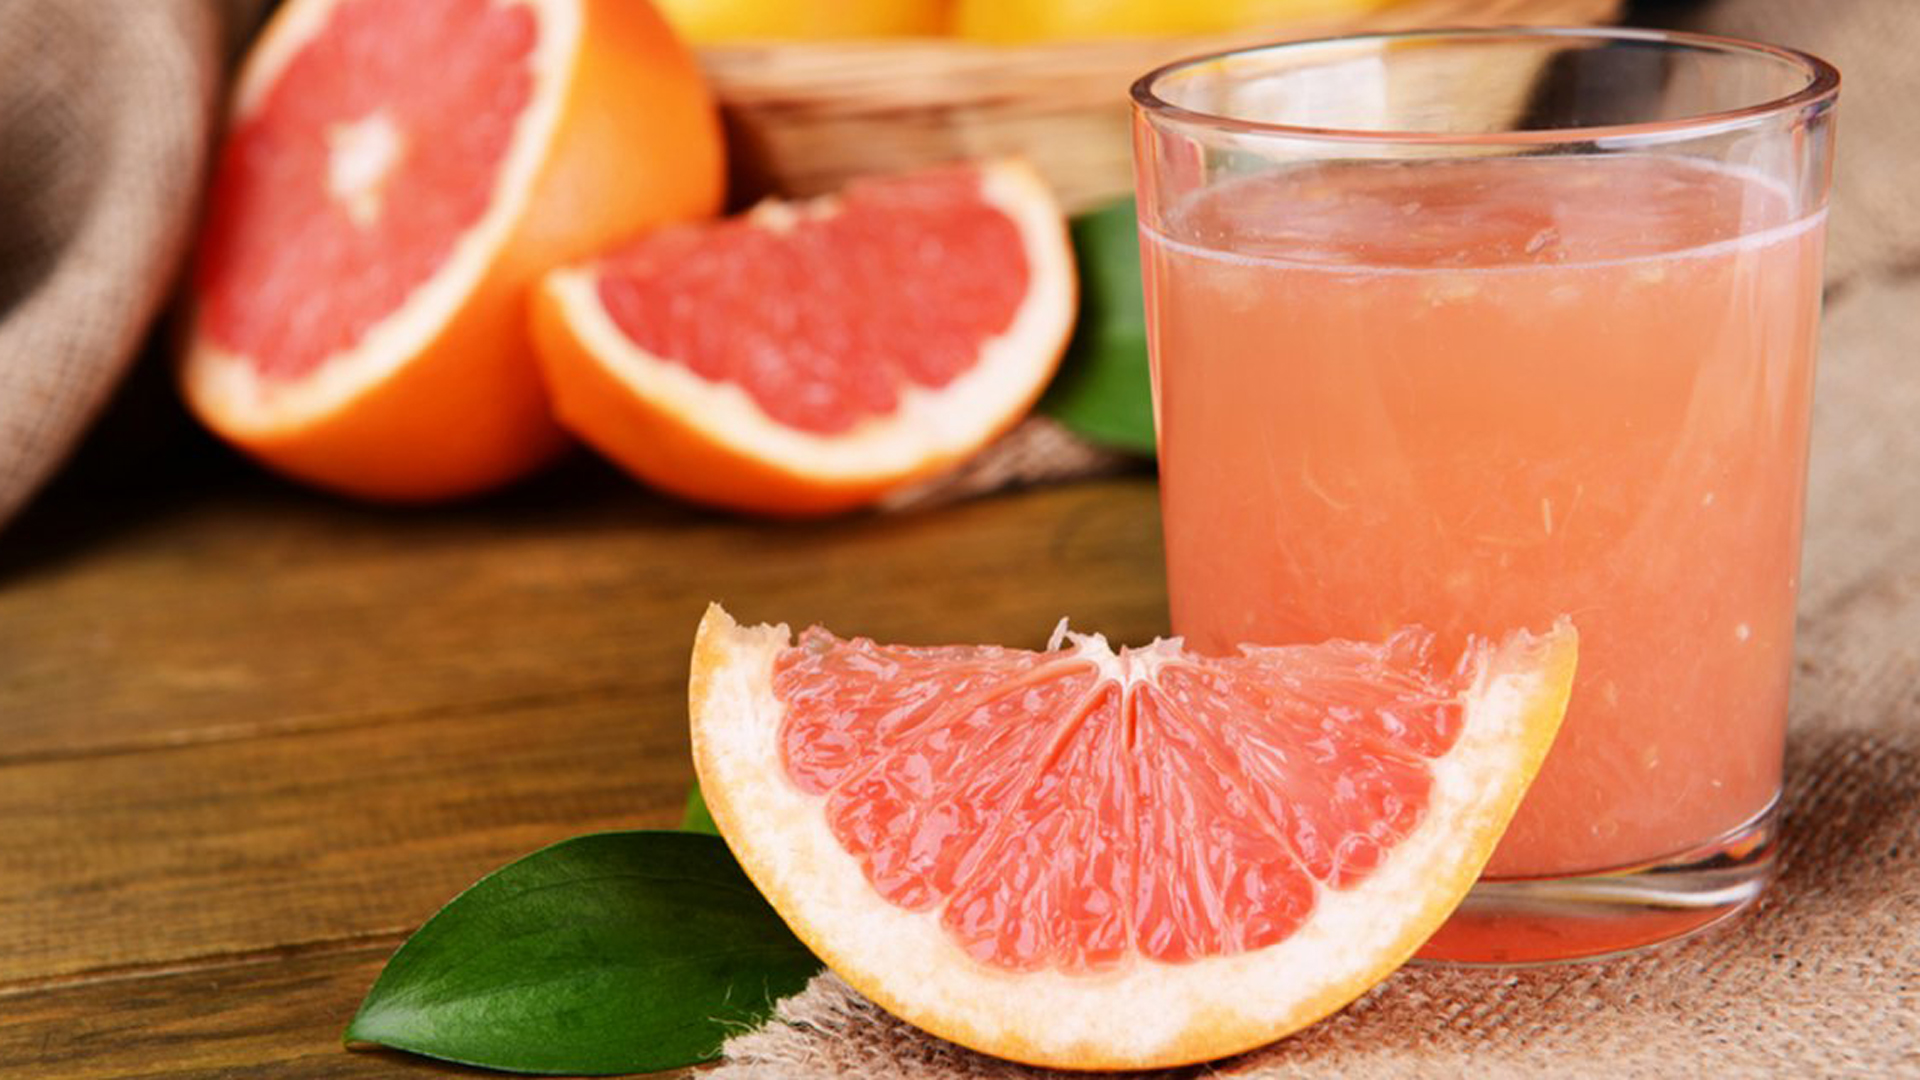 Toronja o pomelo, esta fruta tiene varios nutrientes (Shutterstock)